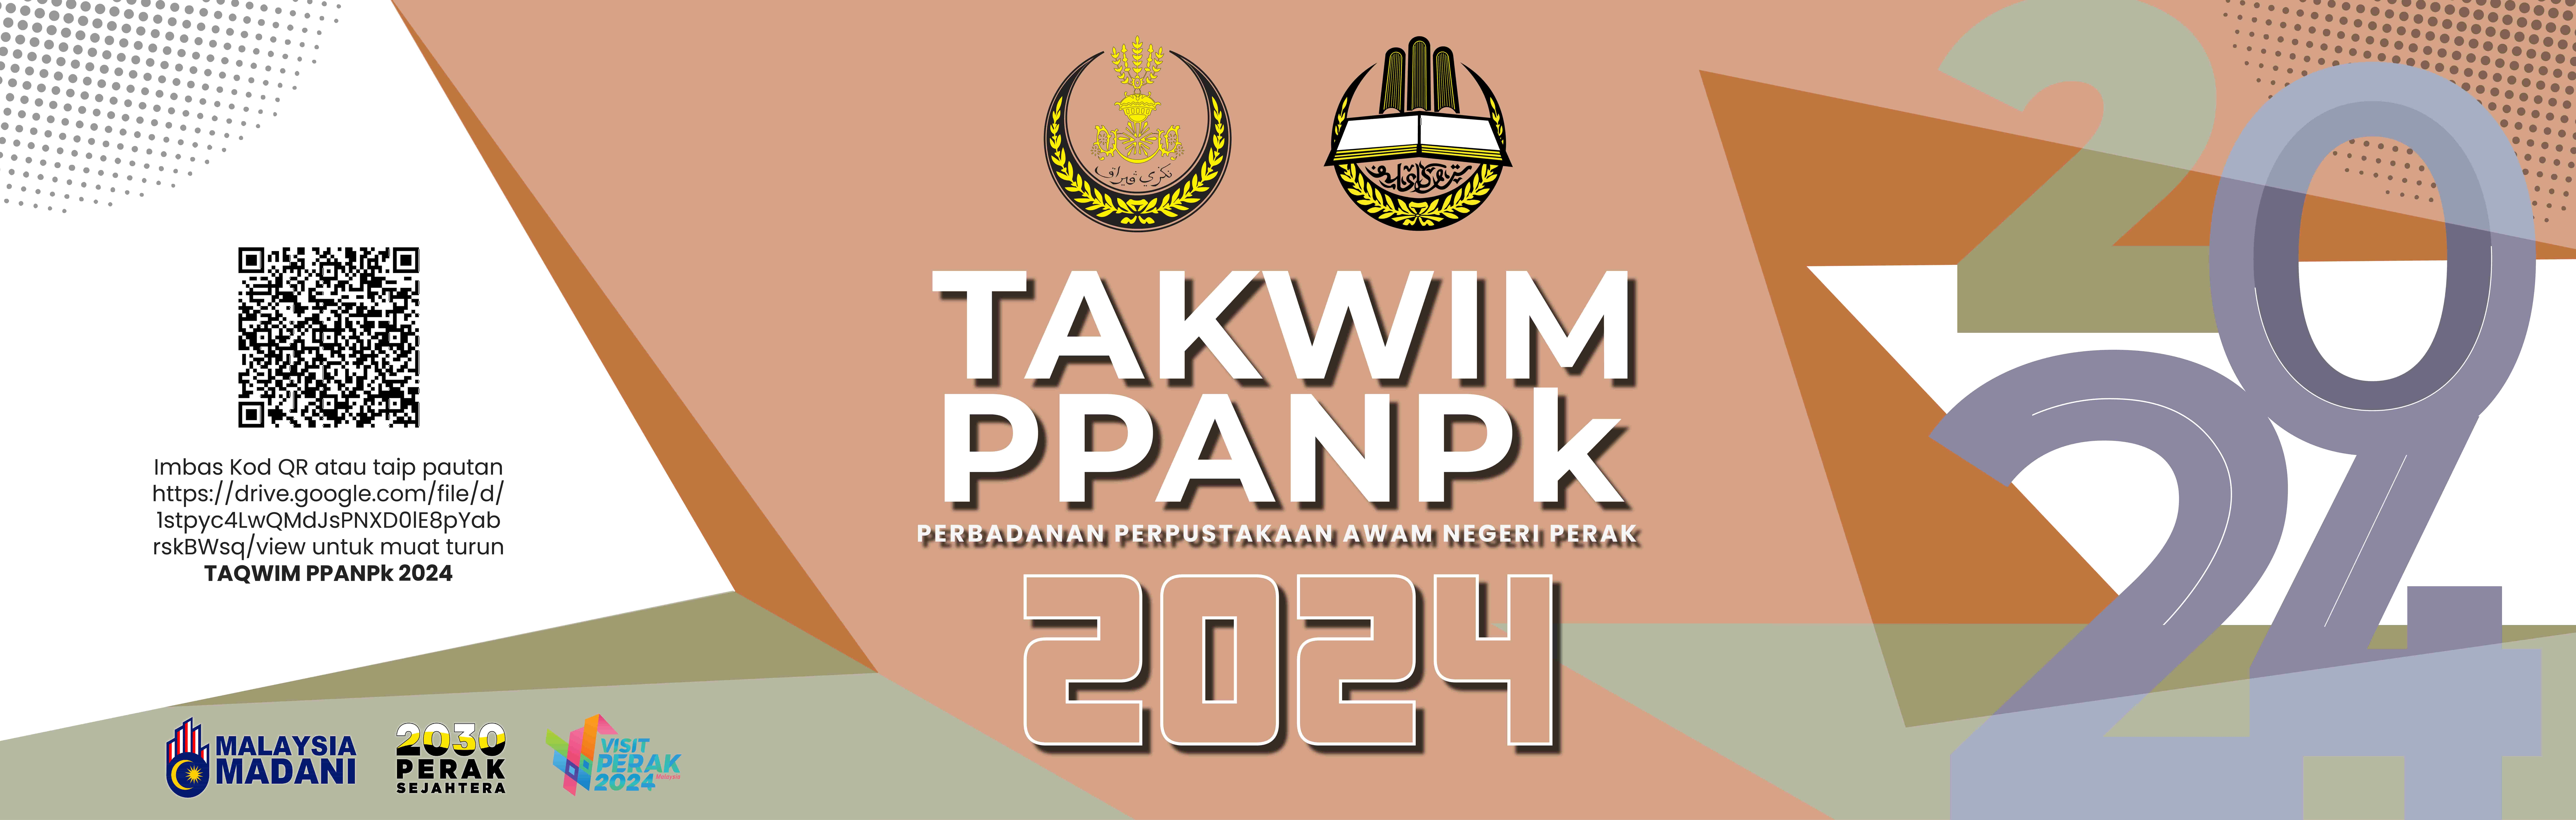 banner_takwim2024